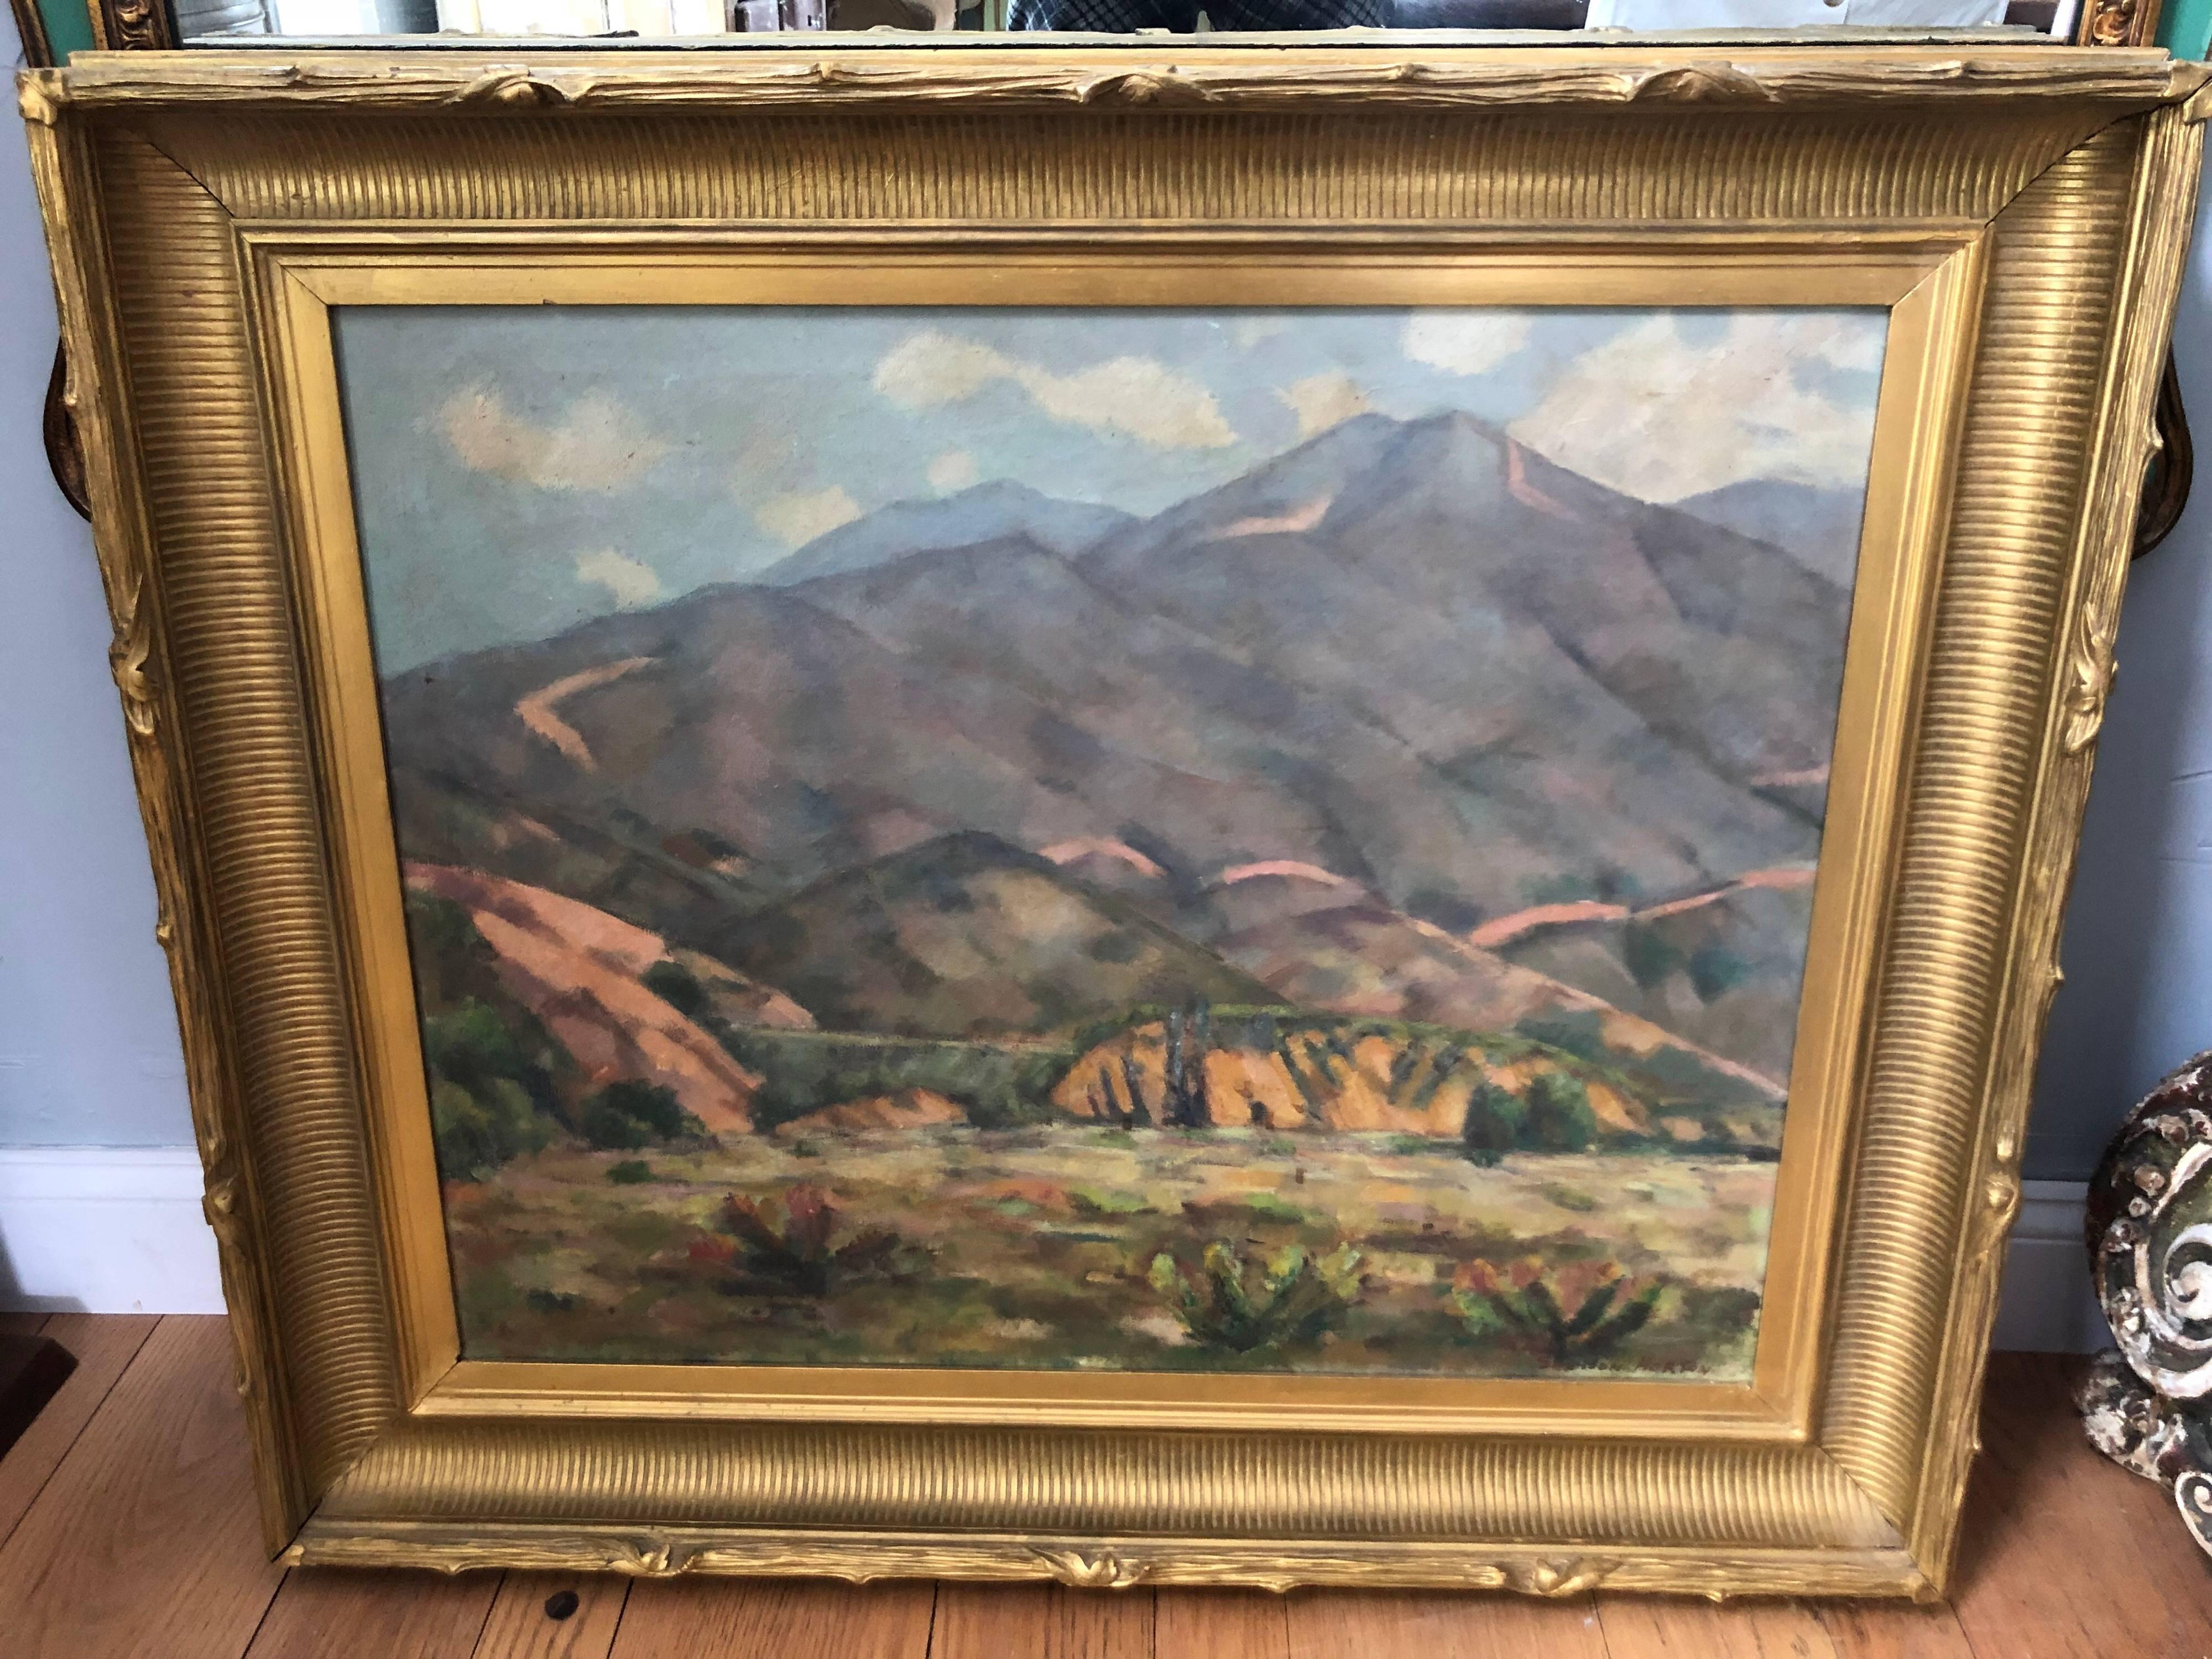 Signed William Sheldon Horton impressionist landscape painting. This 